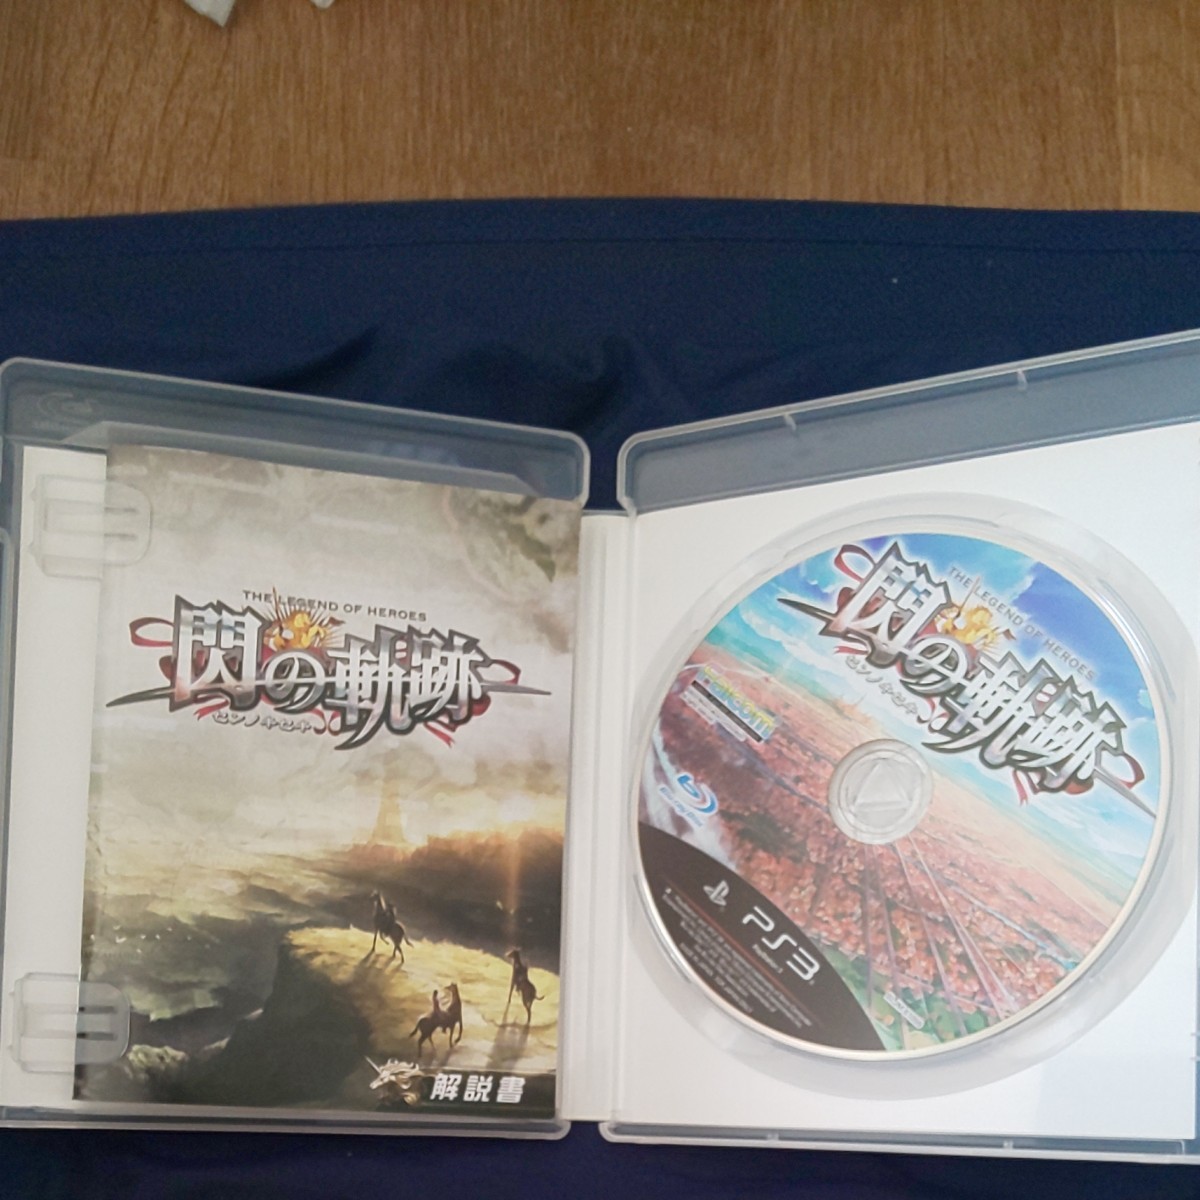 PS3ソフト 英雄伝説 閃の軌跡 限定ドラマCD同梱版